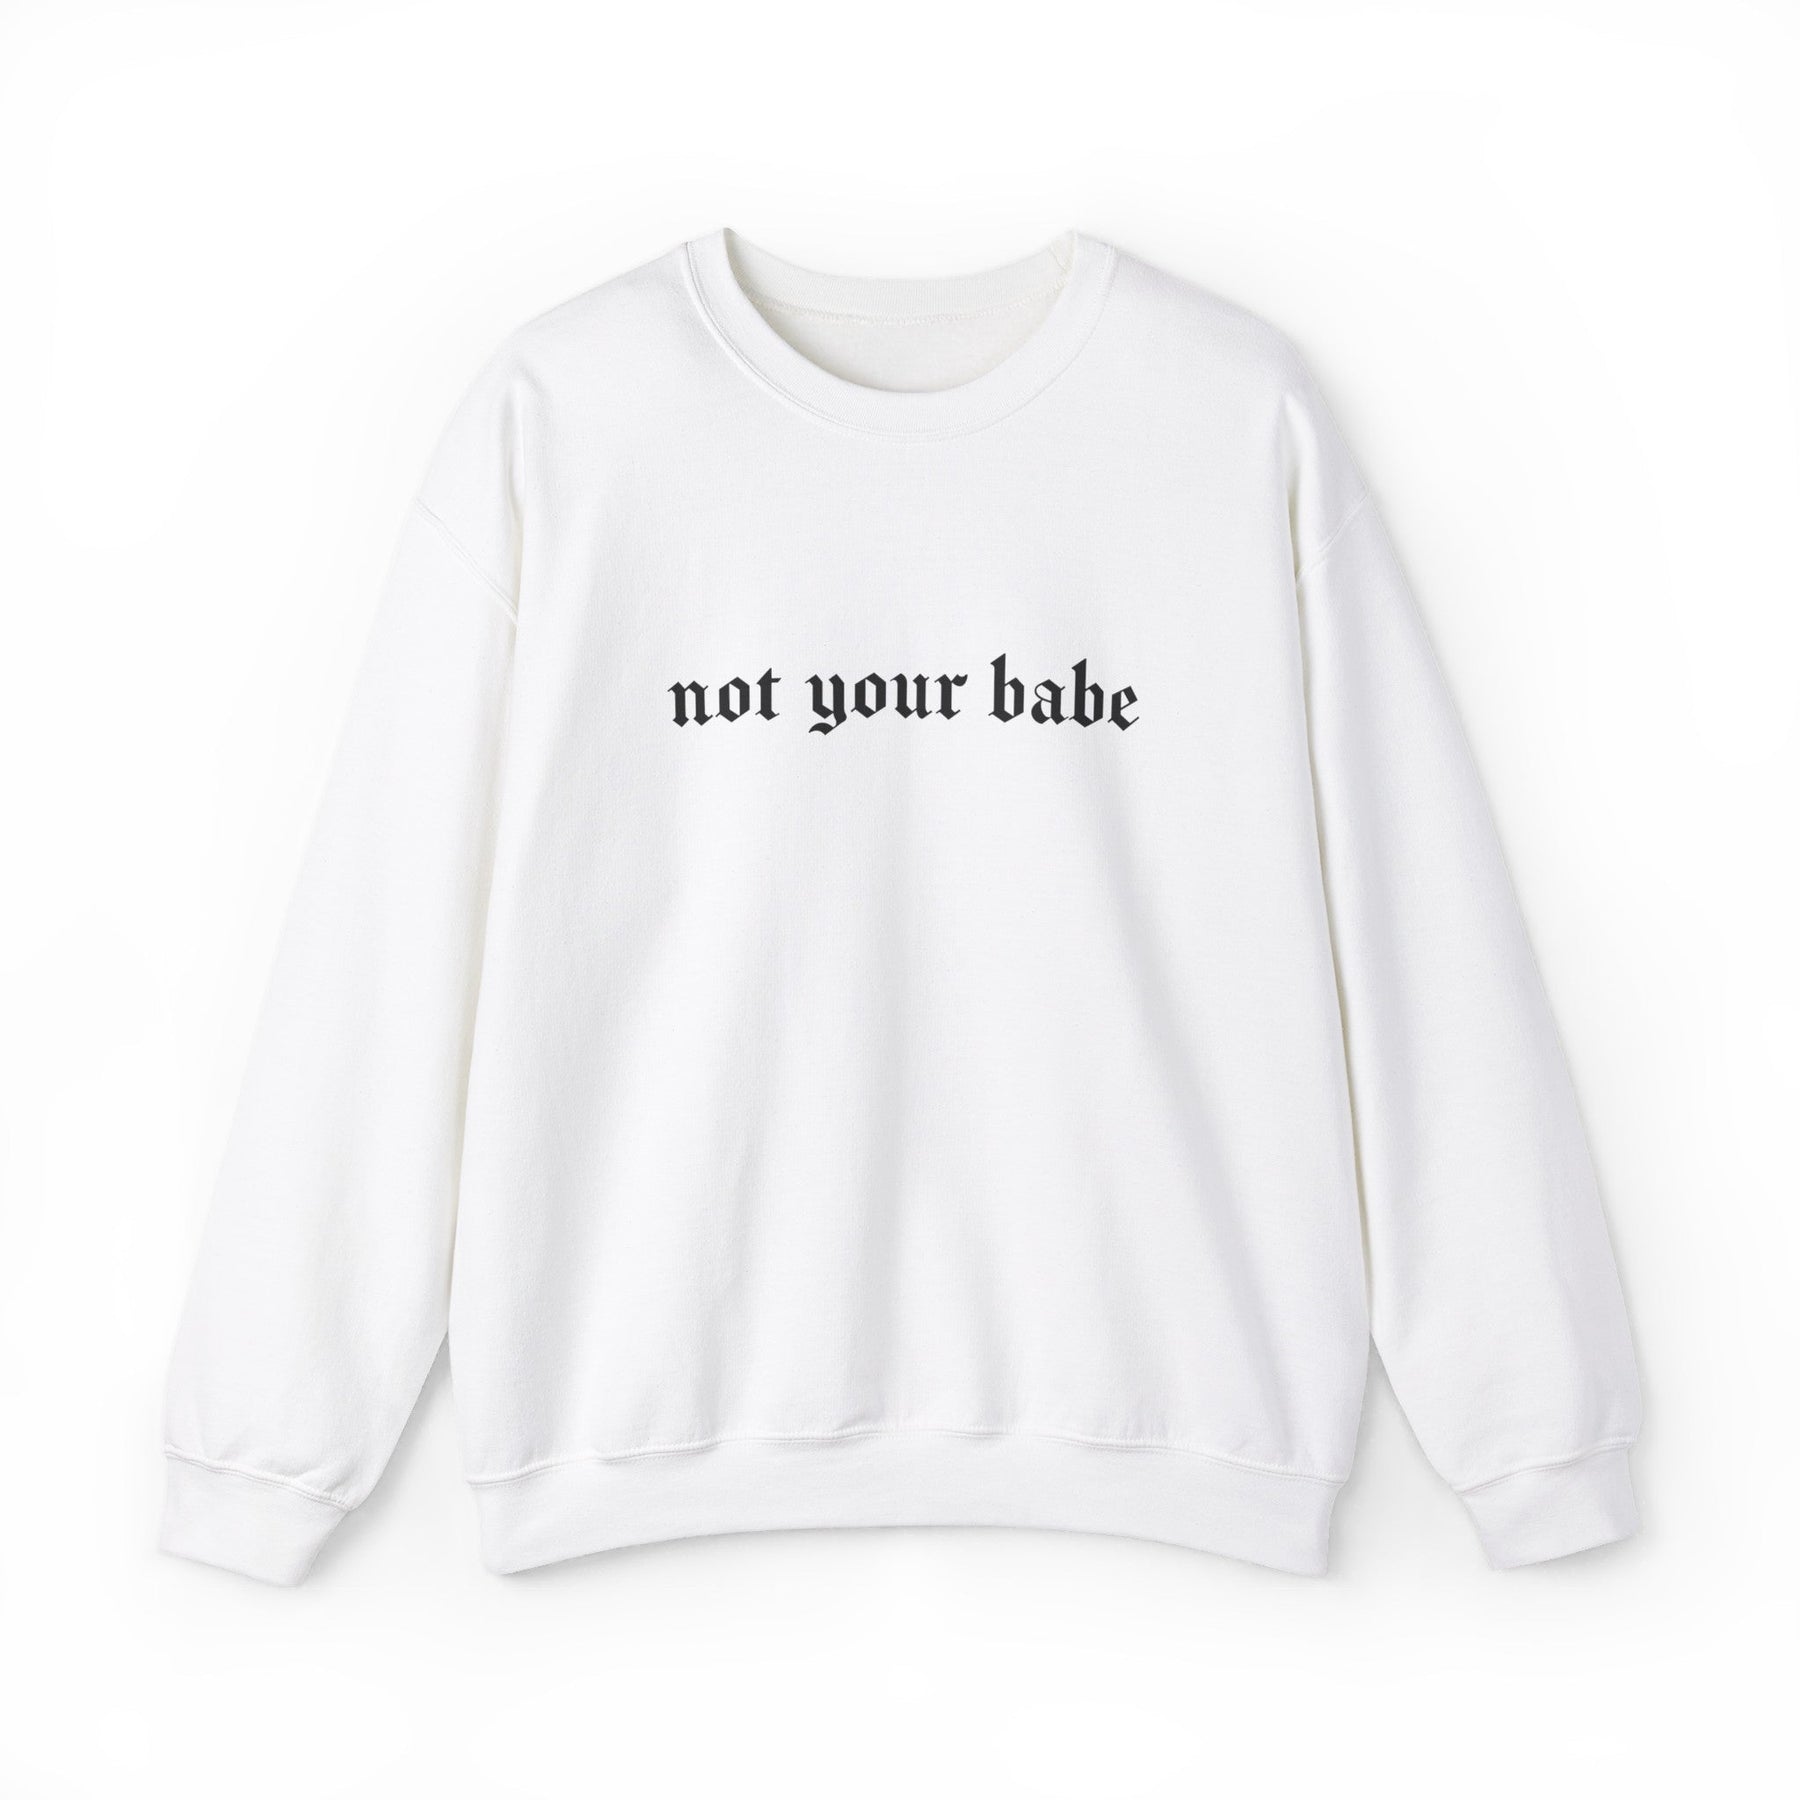 Not Your Babe Classic Goth Crew Neck Sweatshirt - Goth Cloth Co.Sweatshirt12007838998897814327